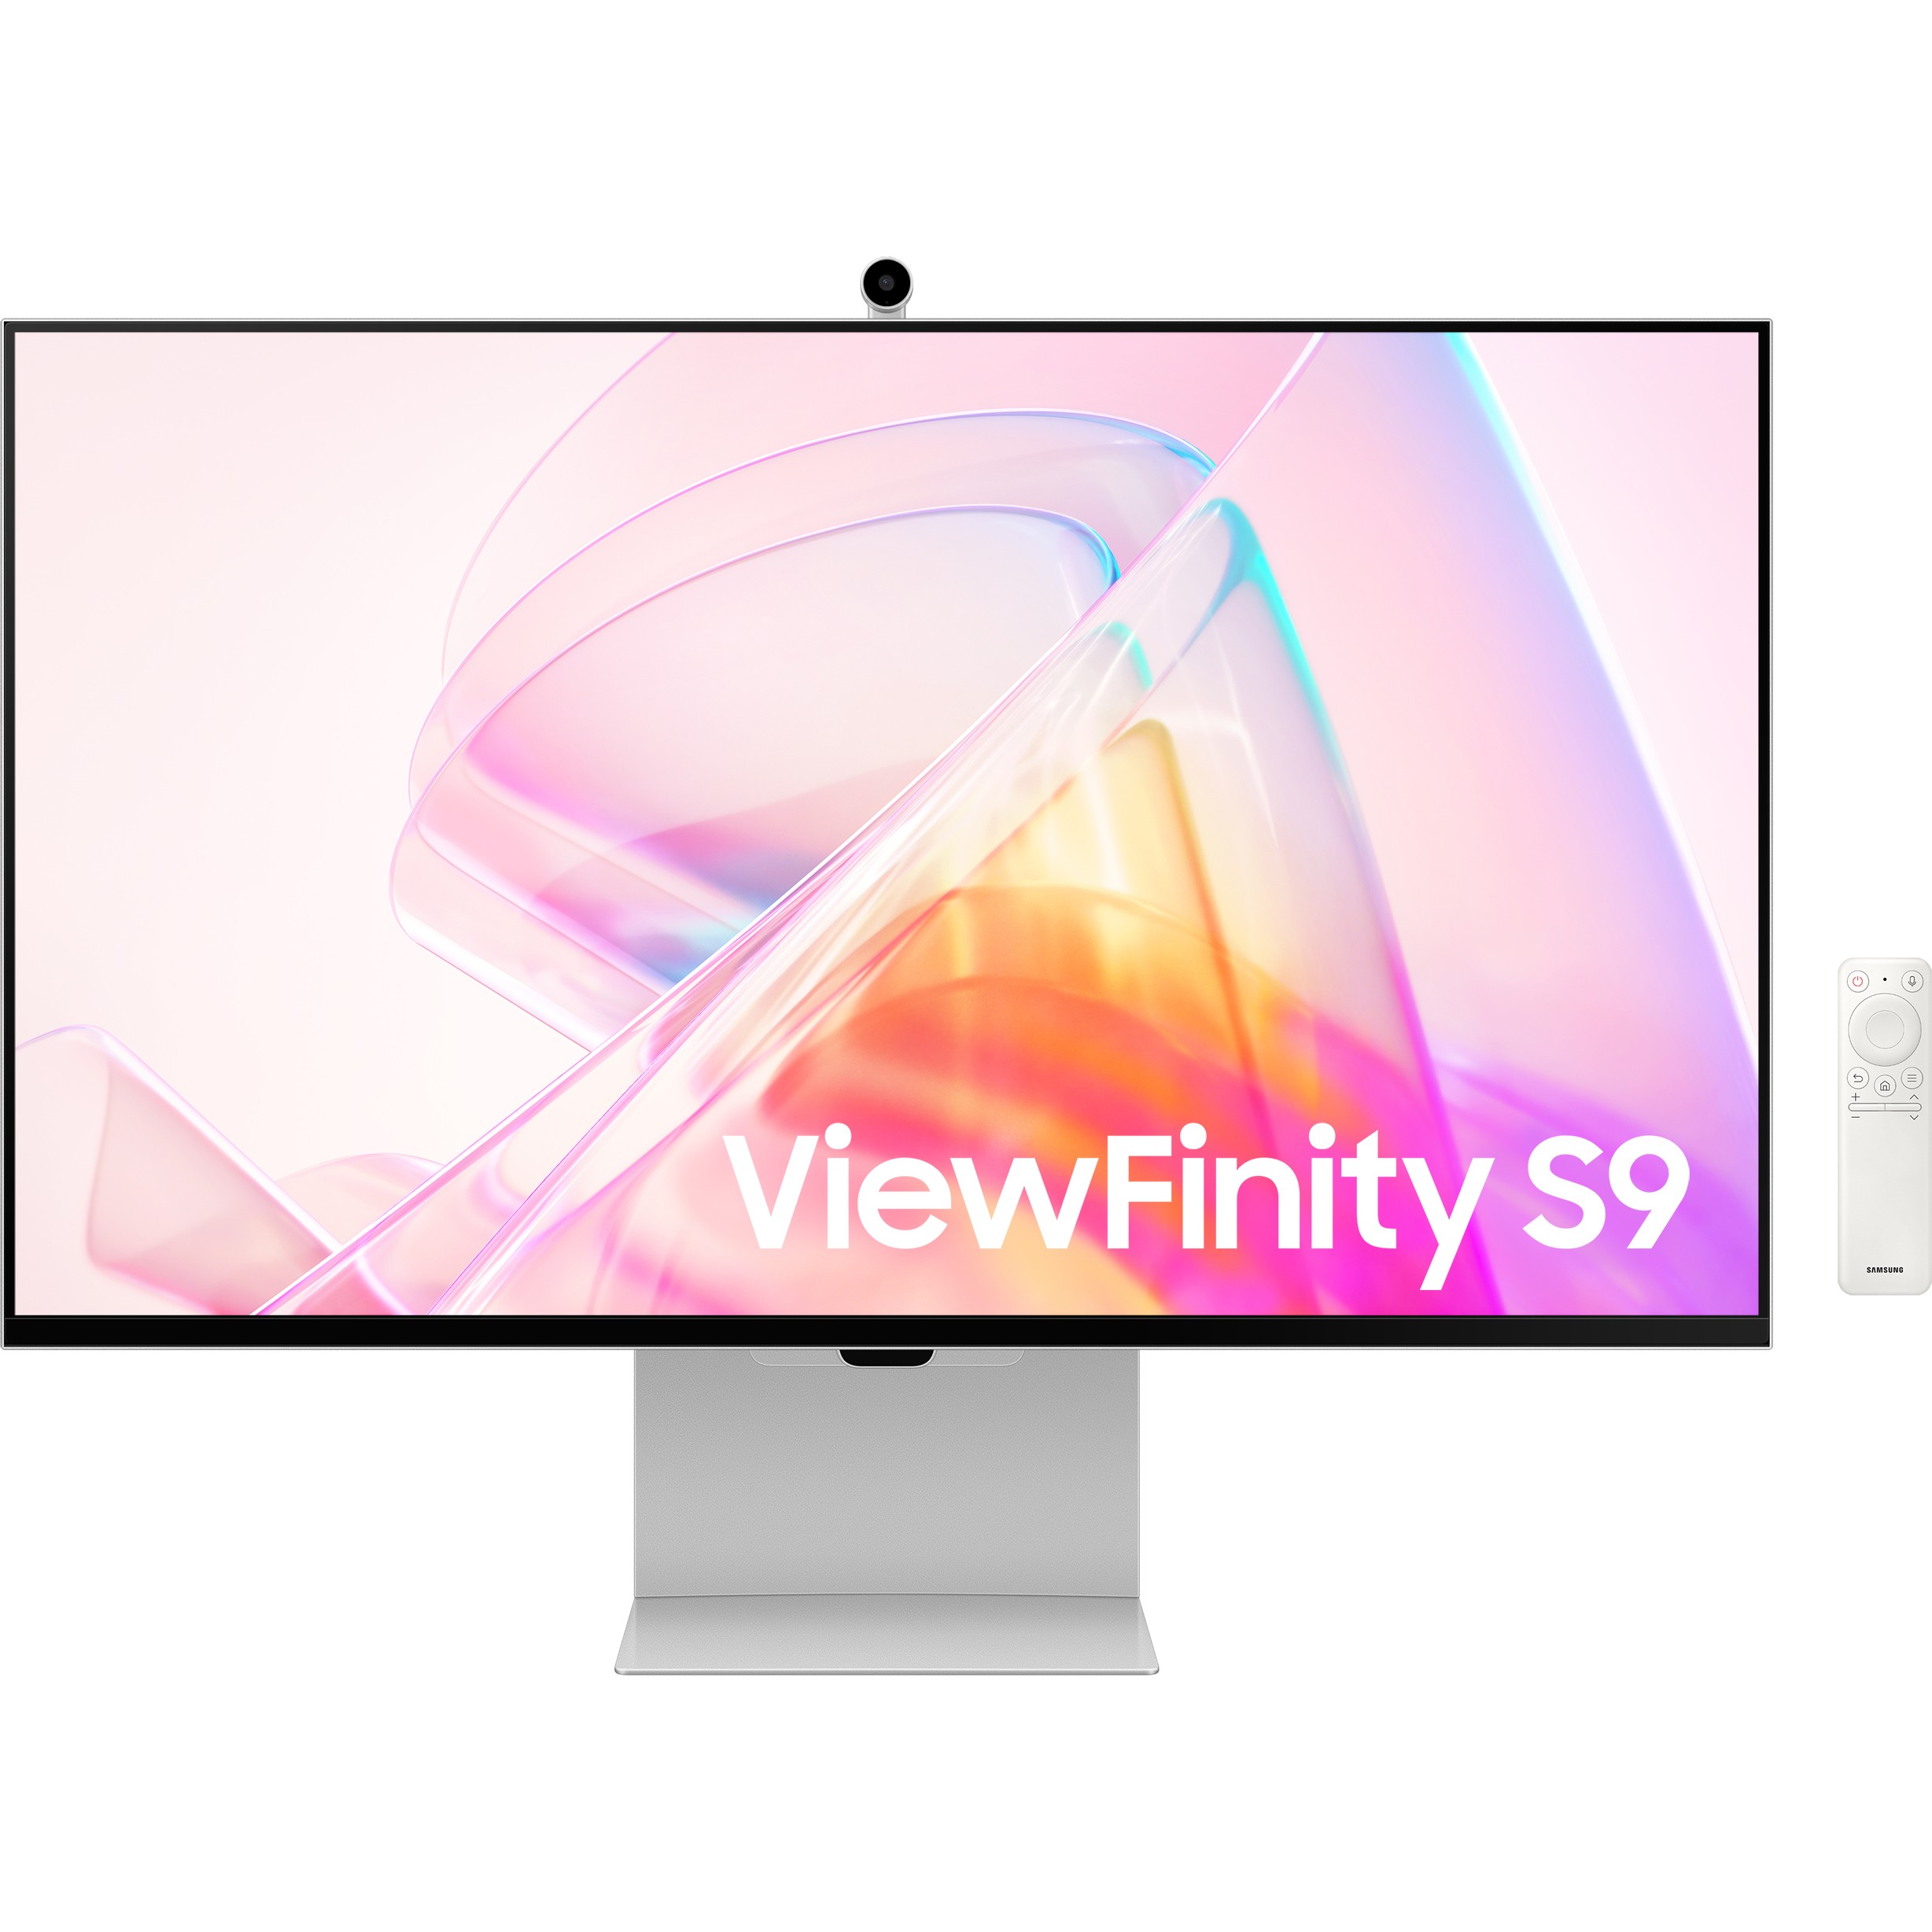 Samsung ViewFinity S90PC computer monitor